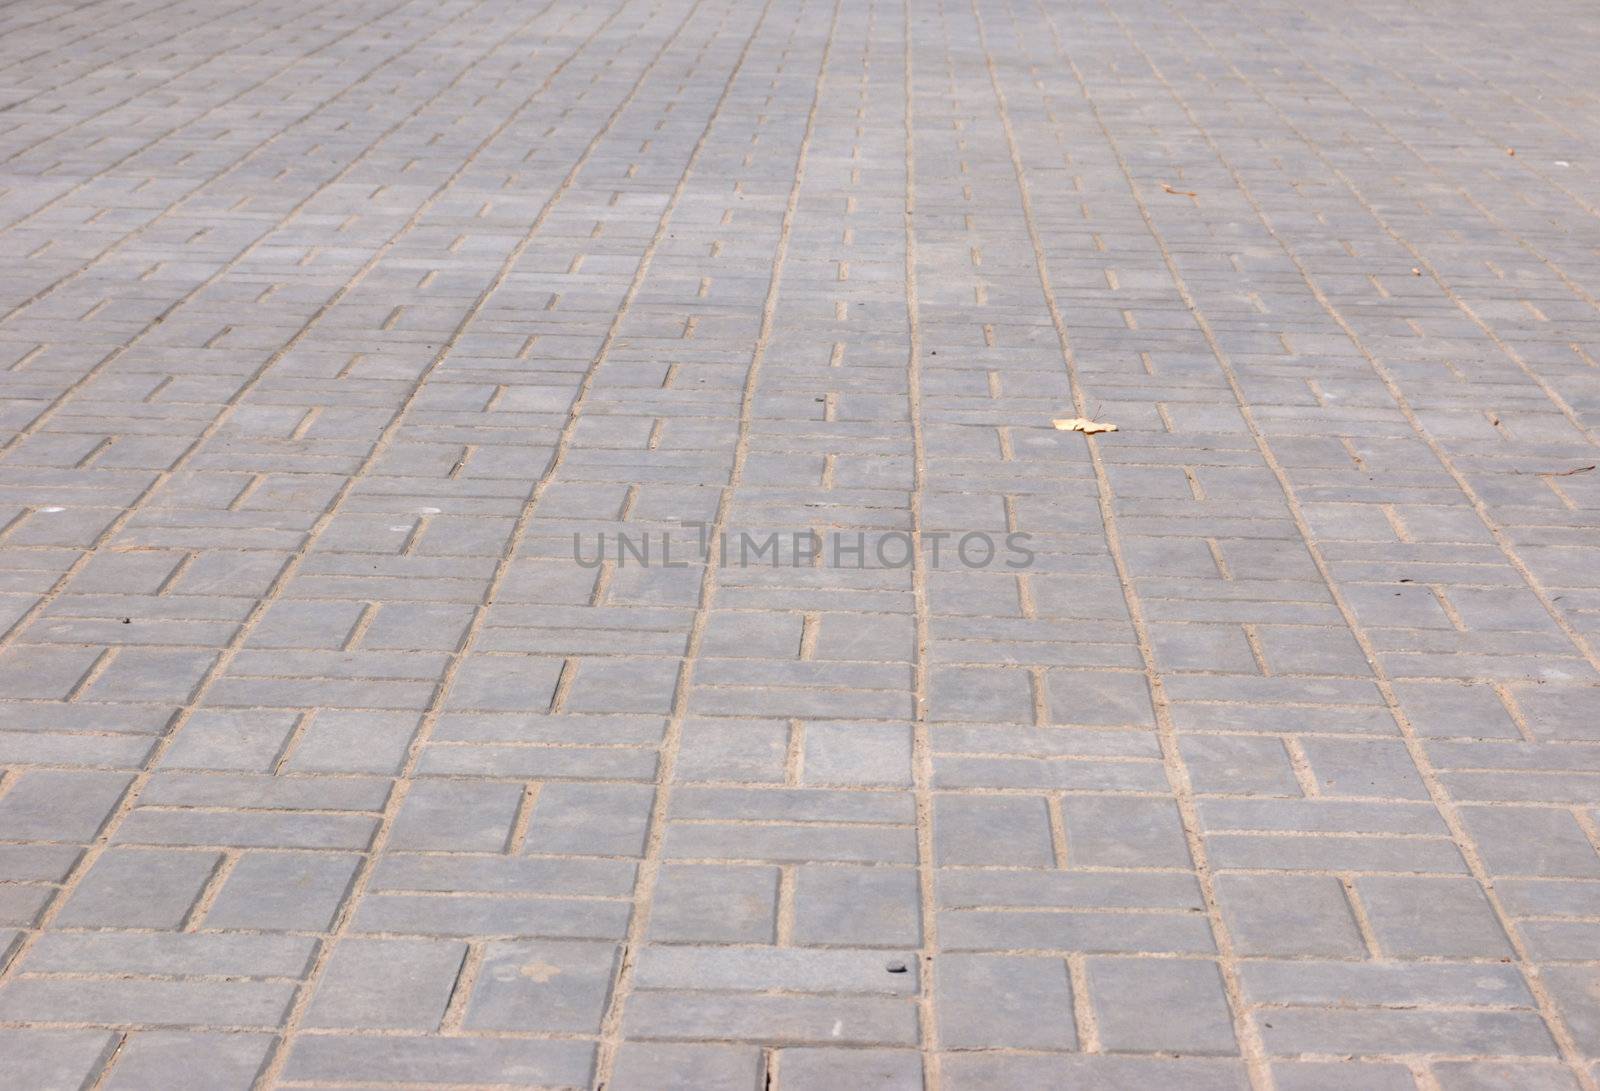 new pavement of stoneblocks (bricks) of grey color